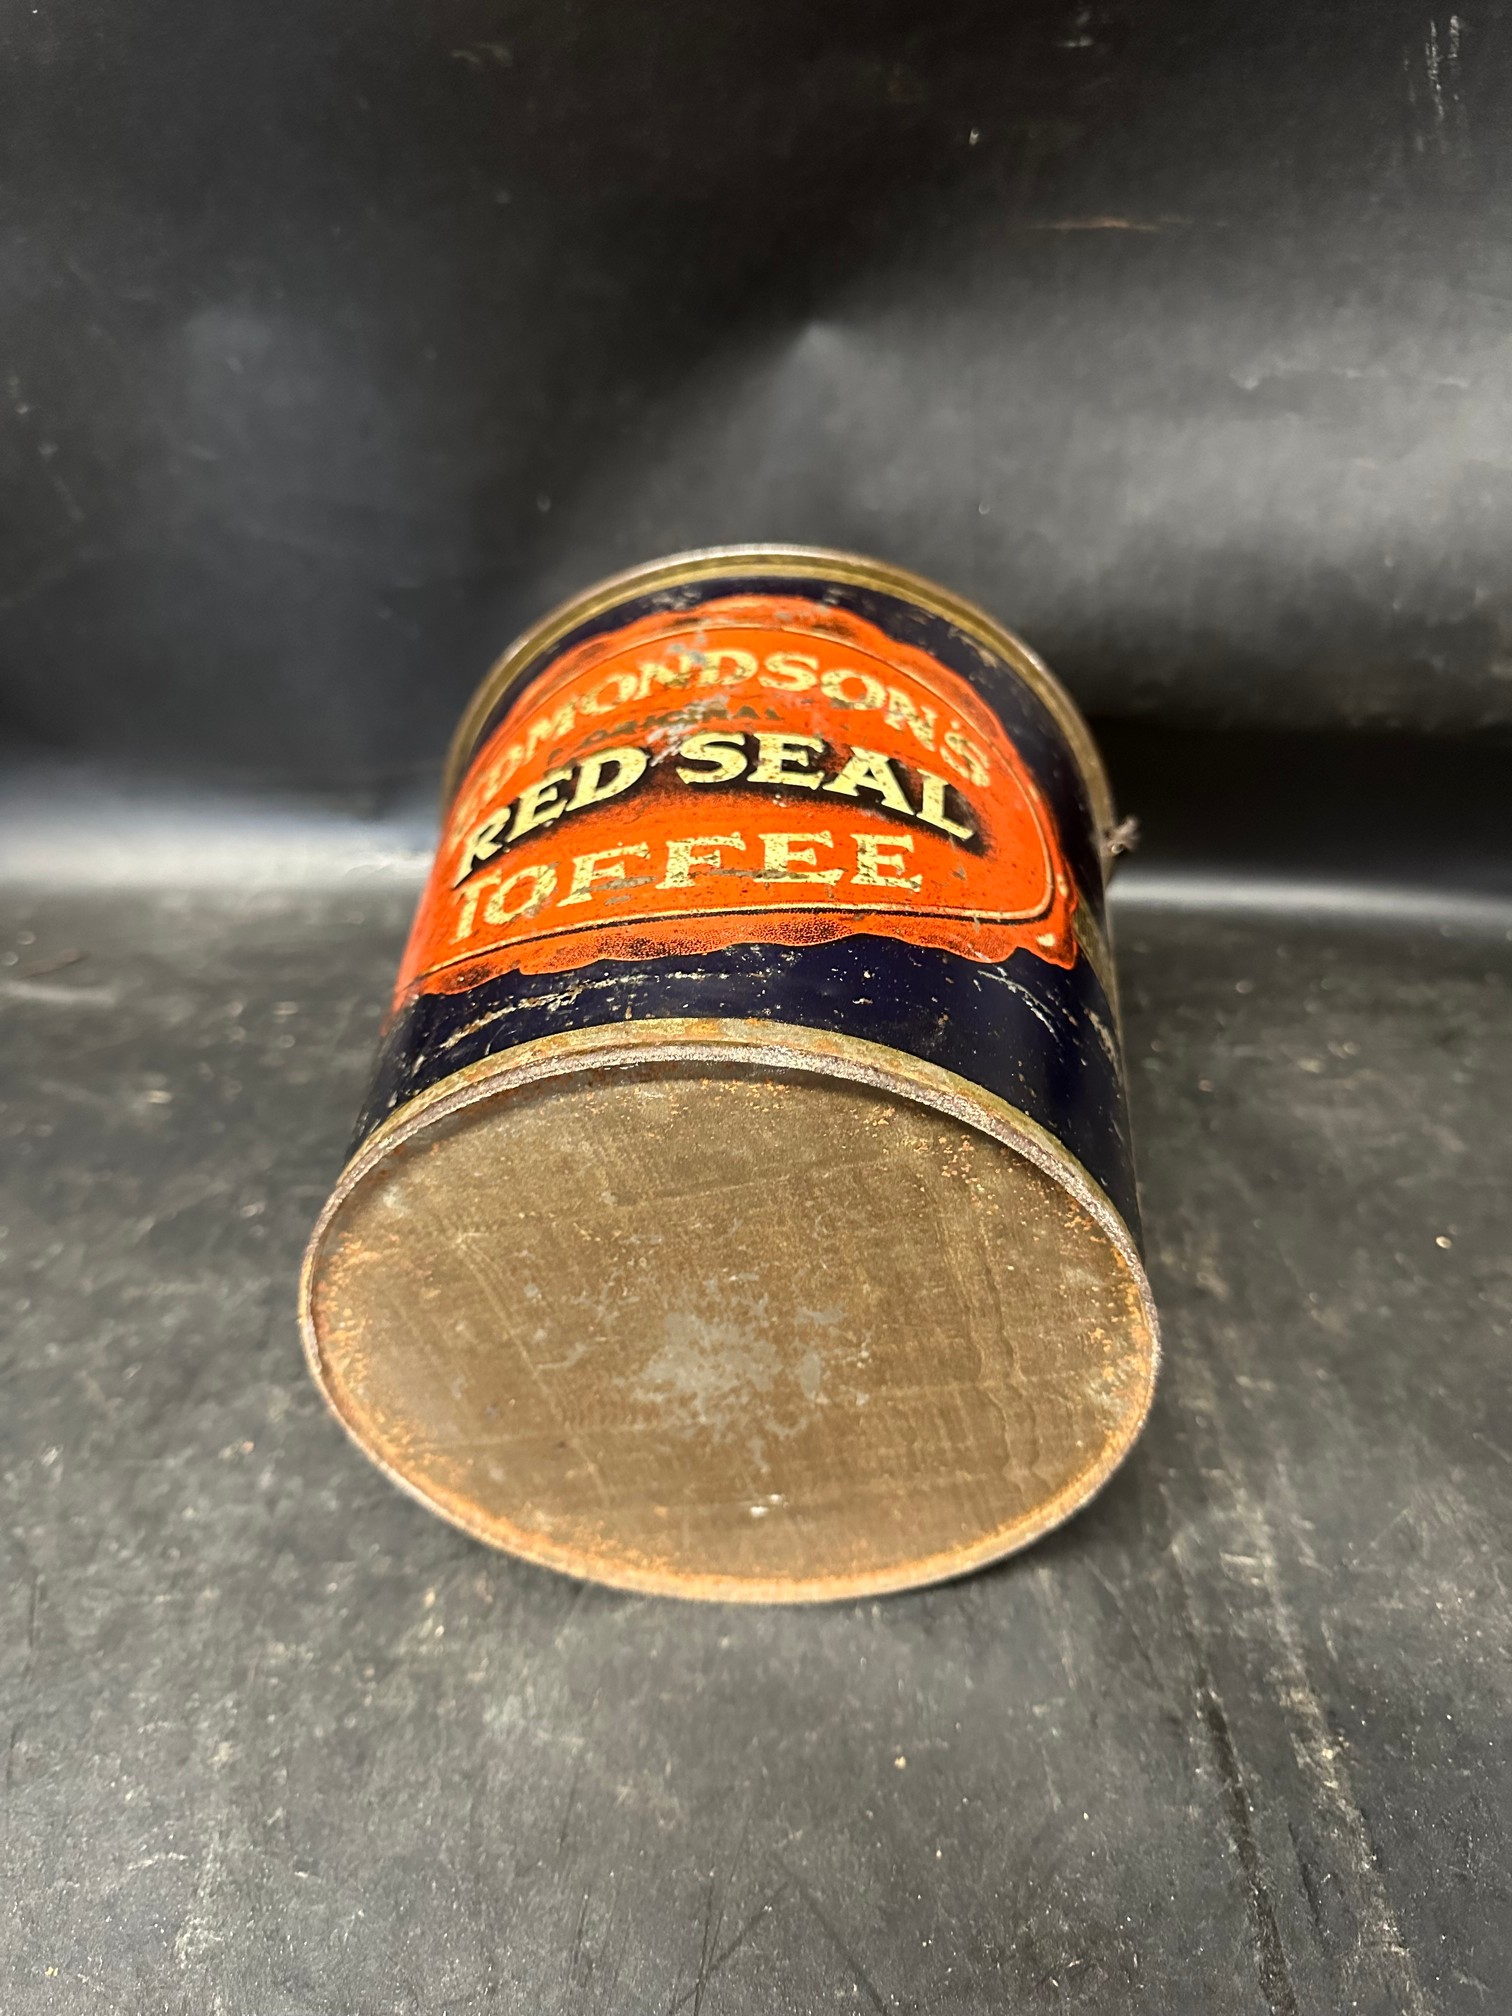 An Edmondson's Original Red Seal Toffee bucket tin. by Jonathan Edmondson & Co. Ltd Purity Works - Image 6 of 7